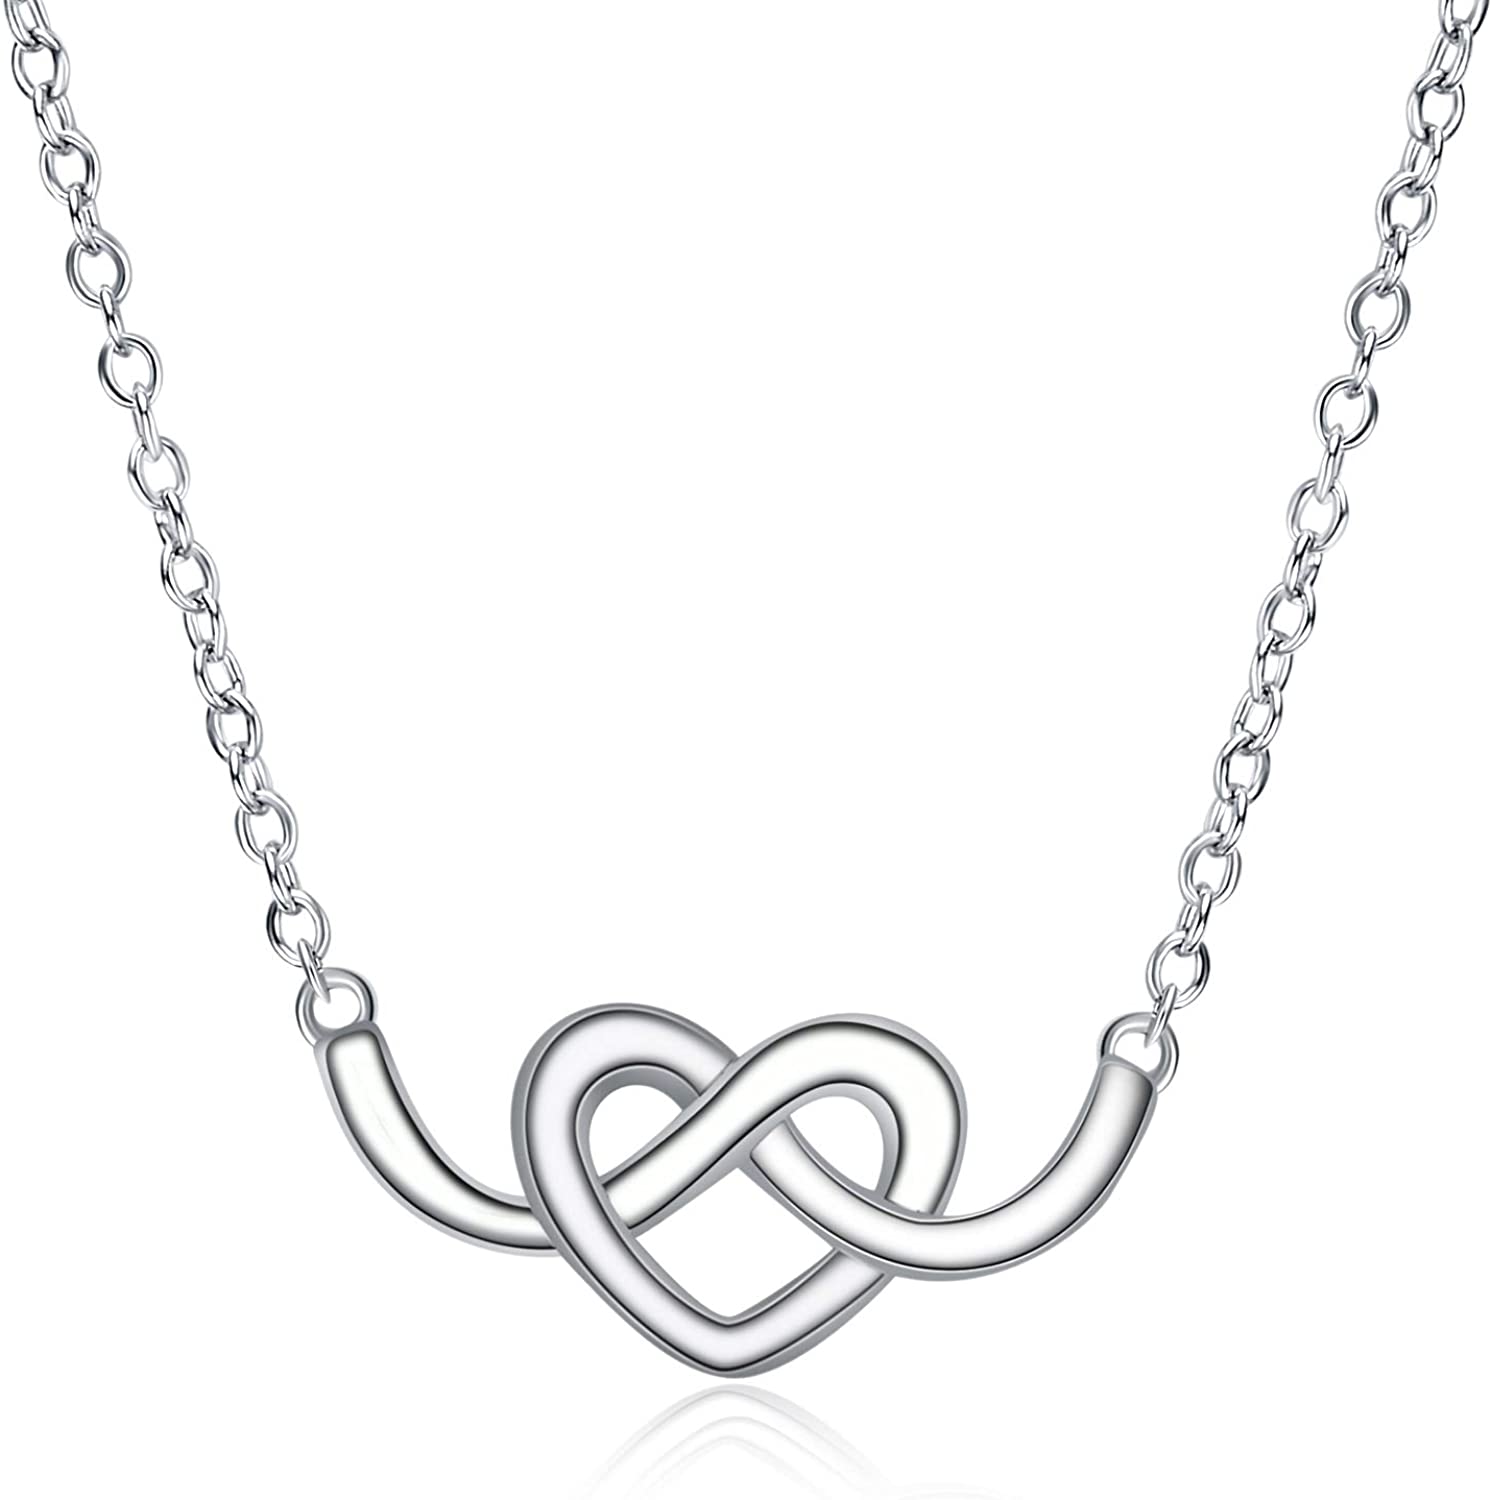 Heart knot choker necklace